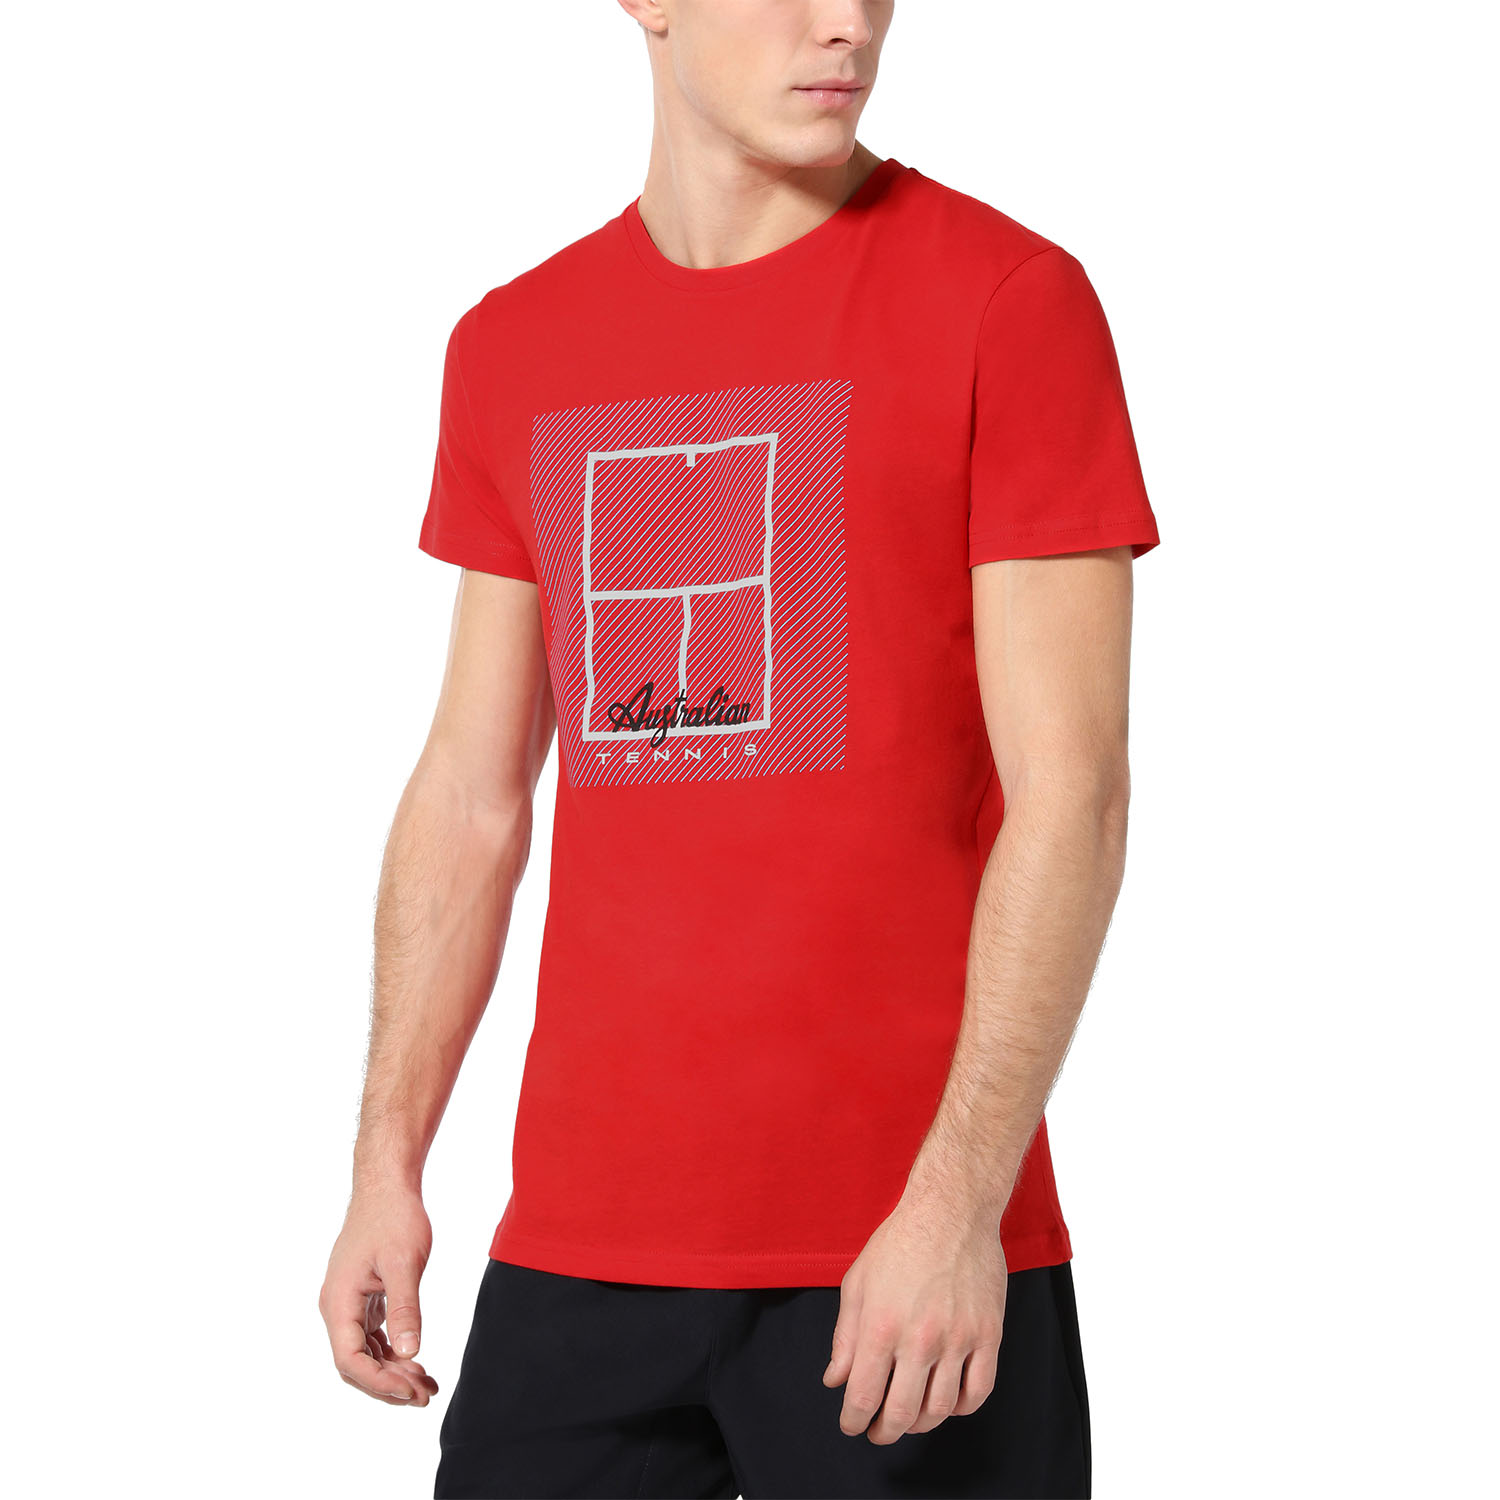 Australian Court Camiseta - Rosso Vivo